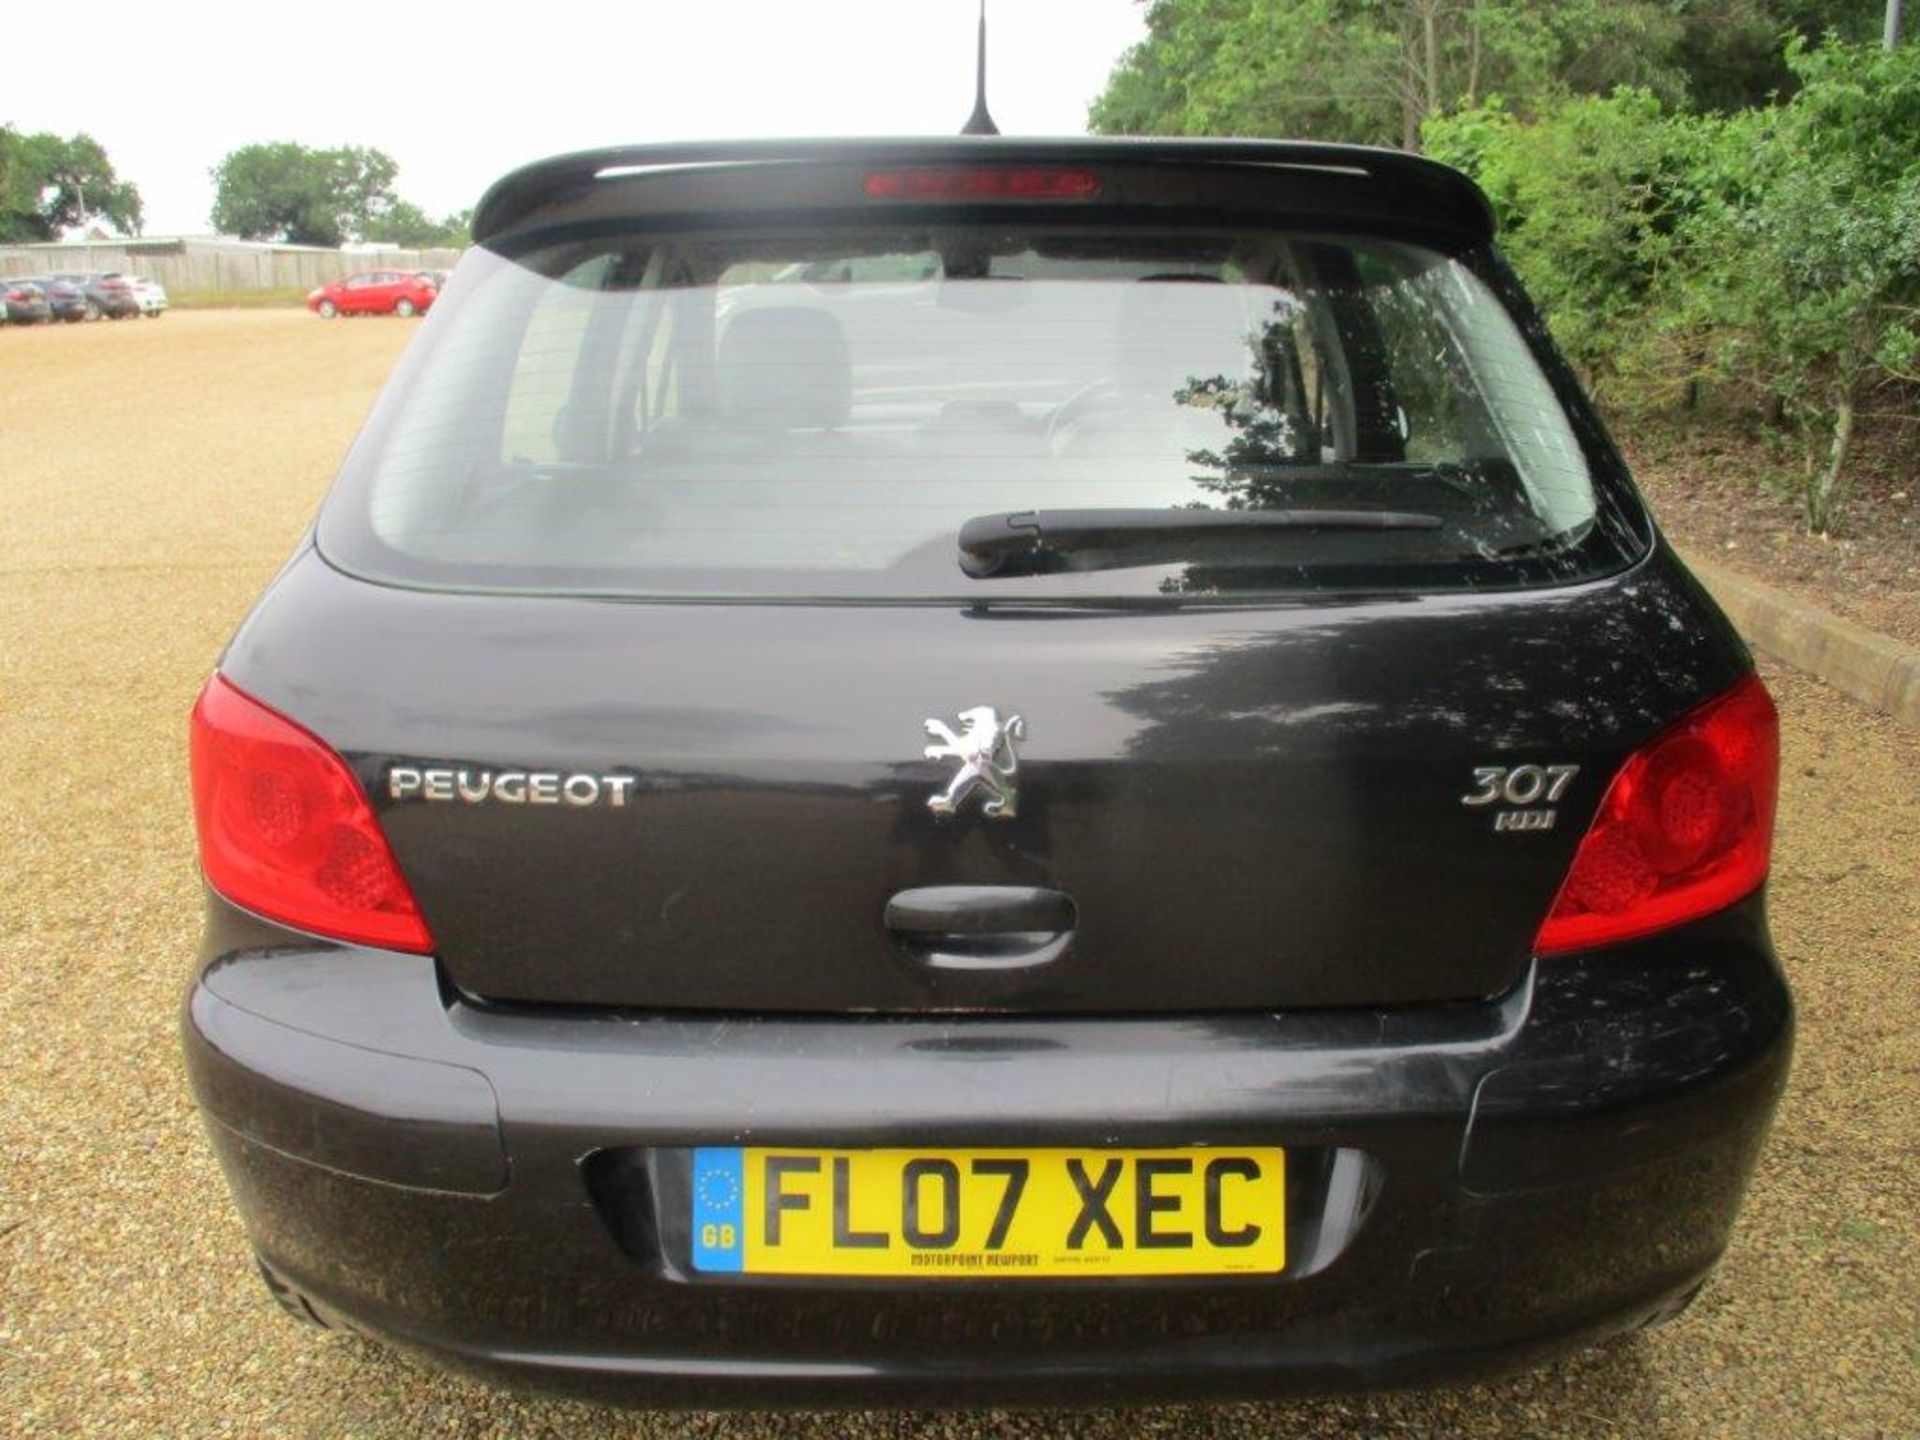 07 07 Peugeot 307 XSI HDI - Image 4 of 19